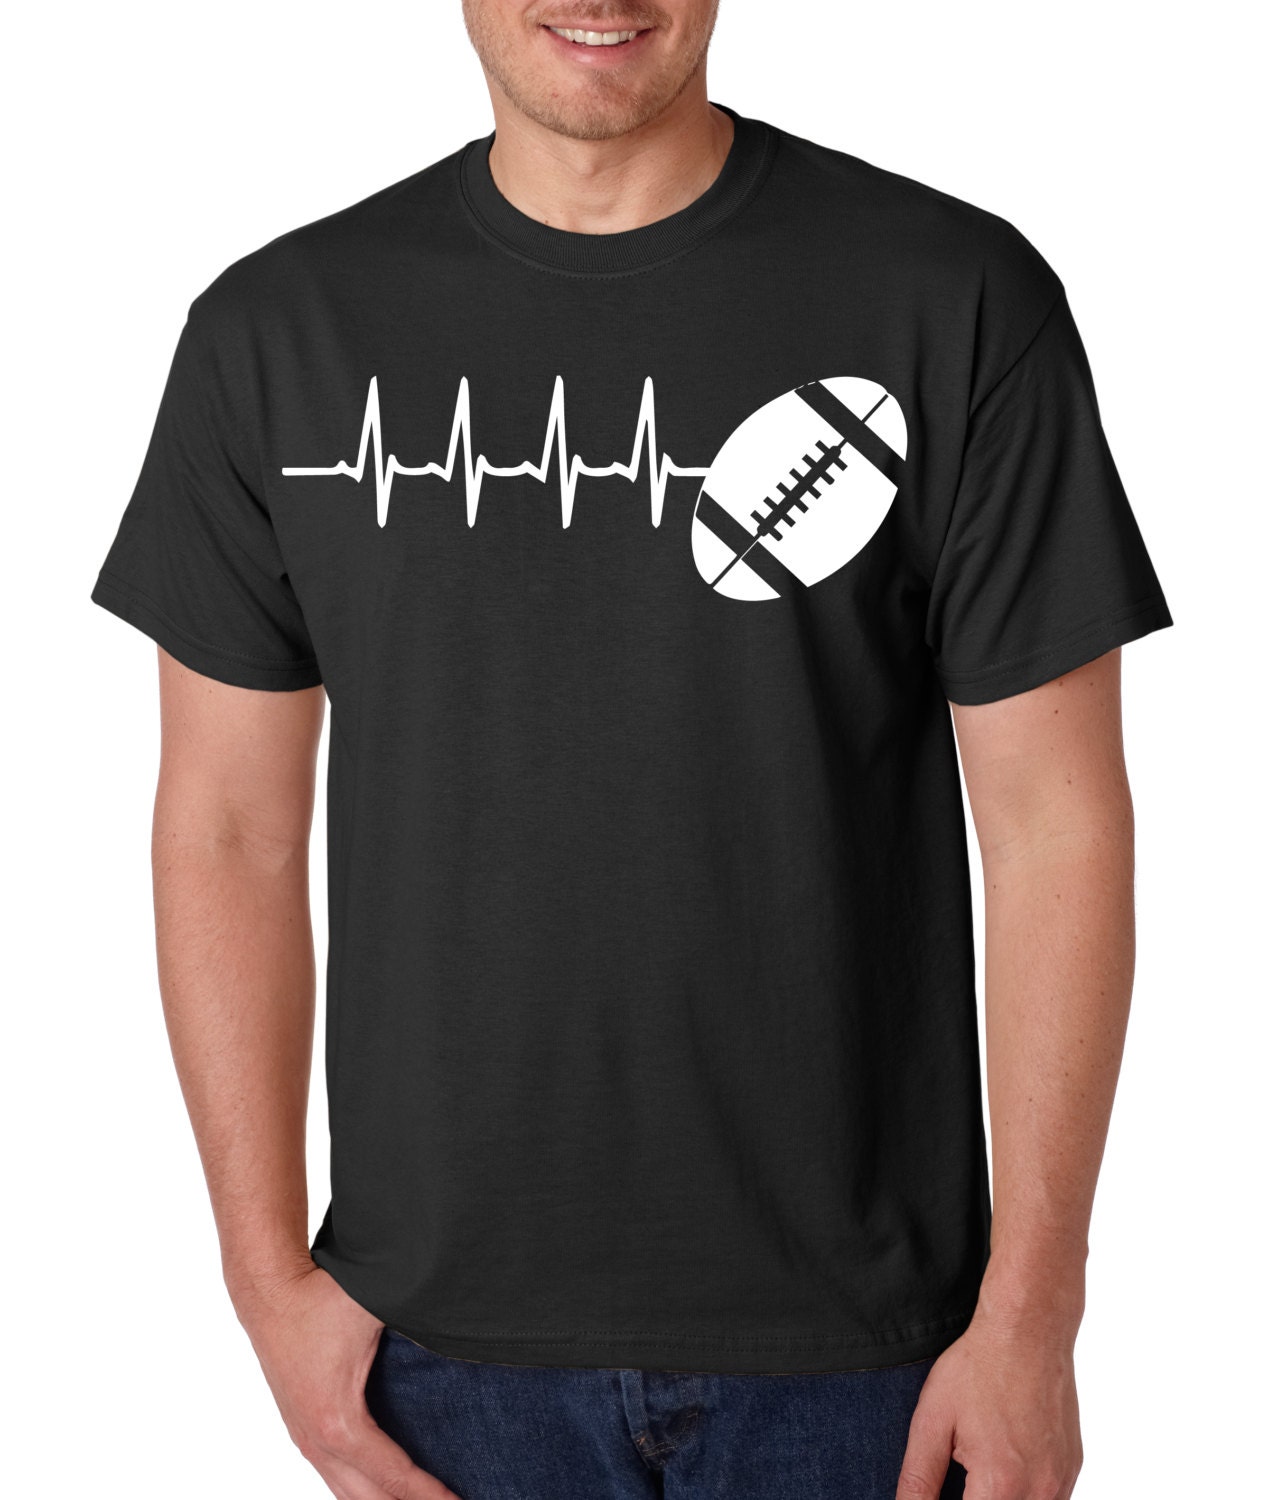 Football Heart Beat T-Shirts Football lovers Tshirts